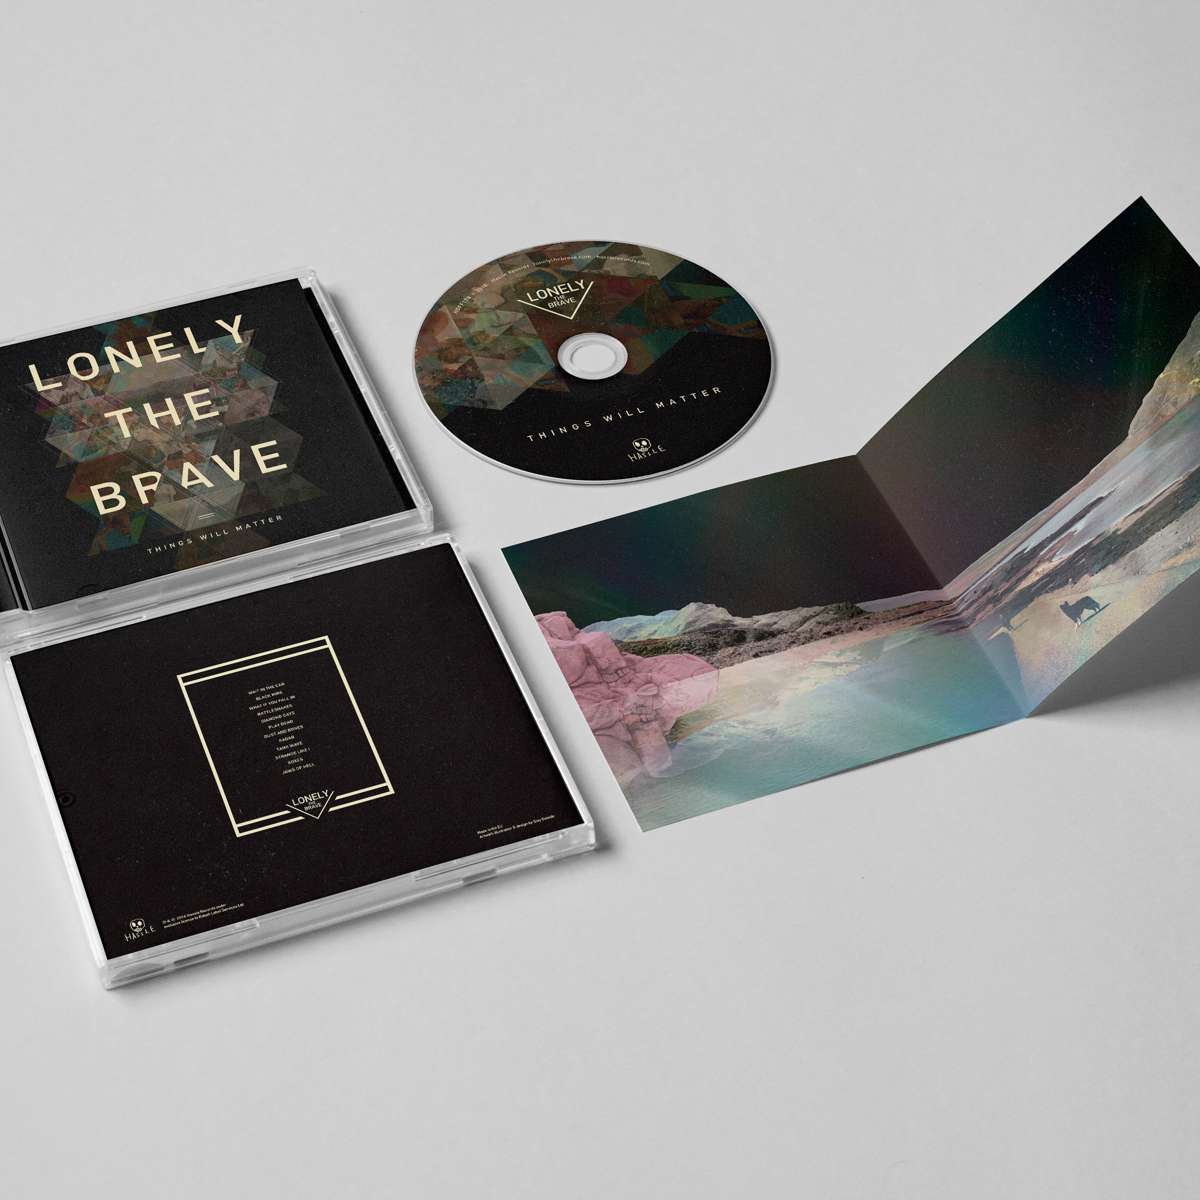 Things Will Matter - CD Album (Standard Jewel Case) - Lonely The Brave - Lonely The Brave Things Will Matter